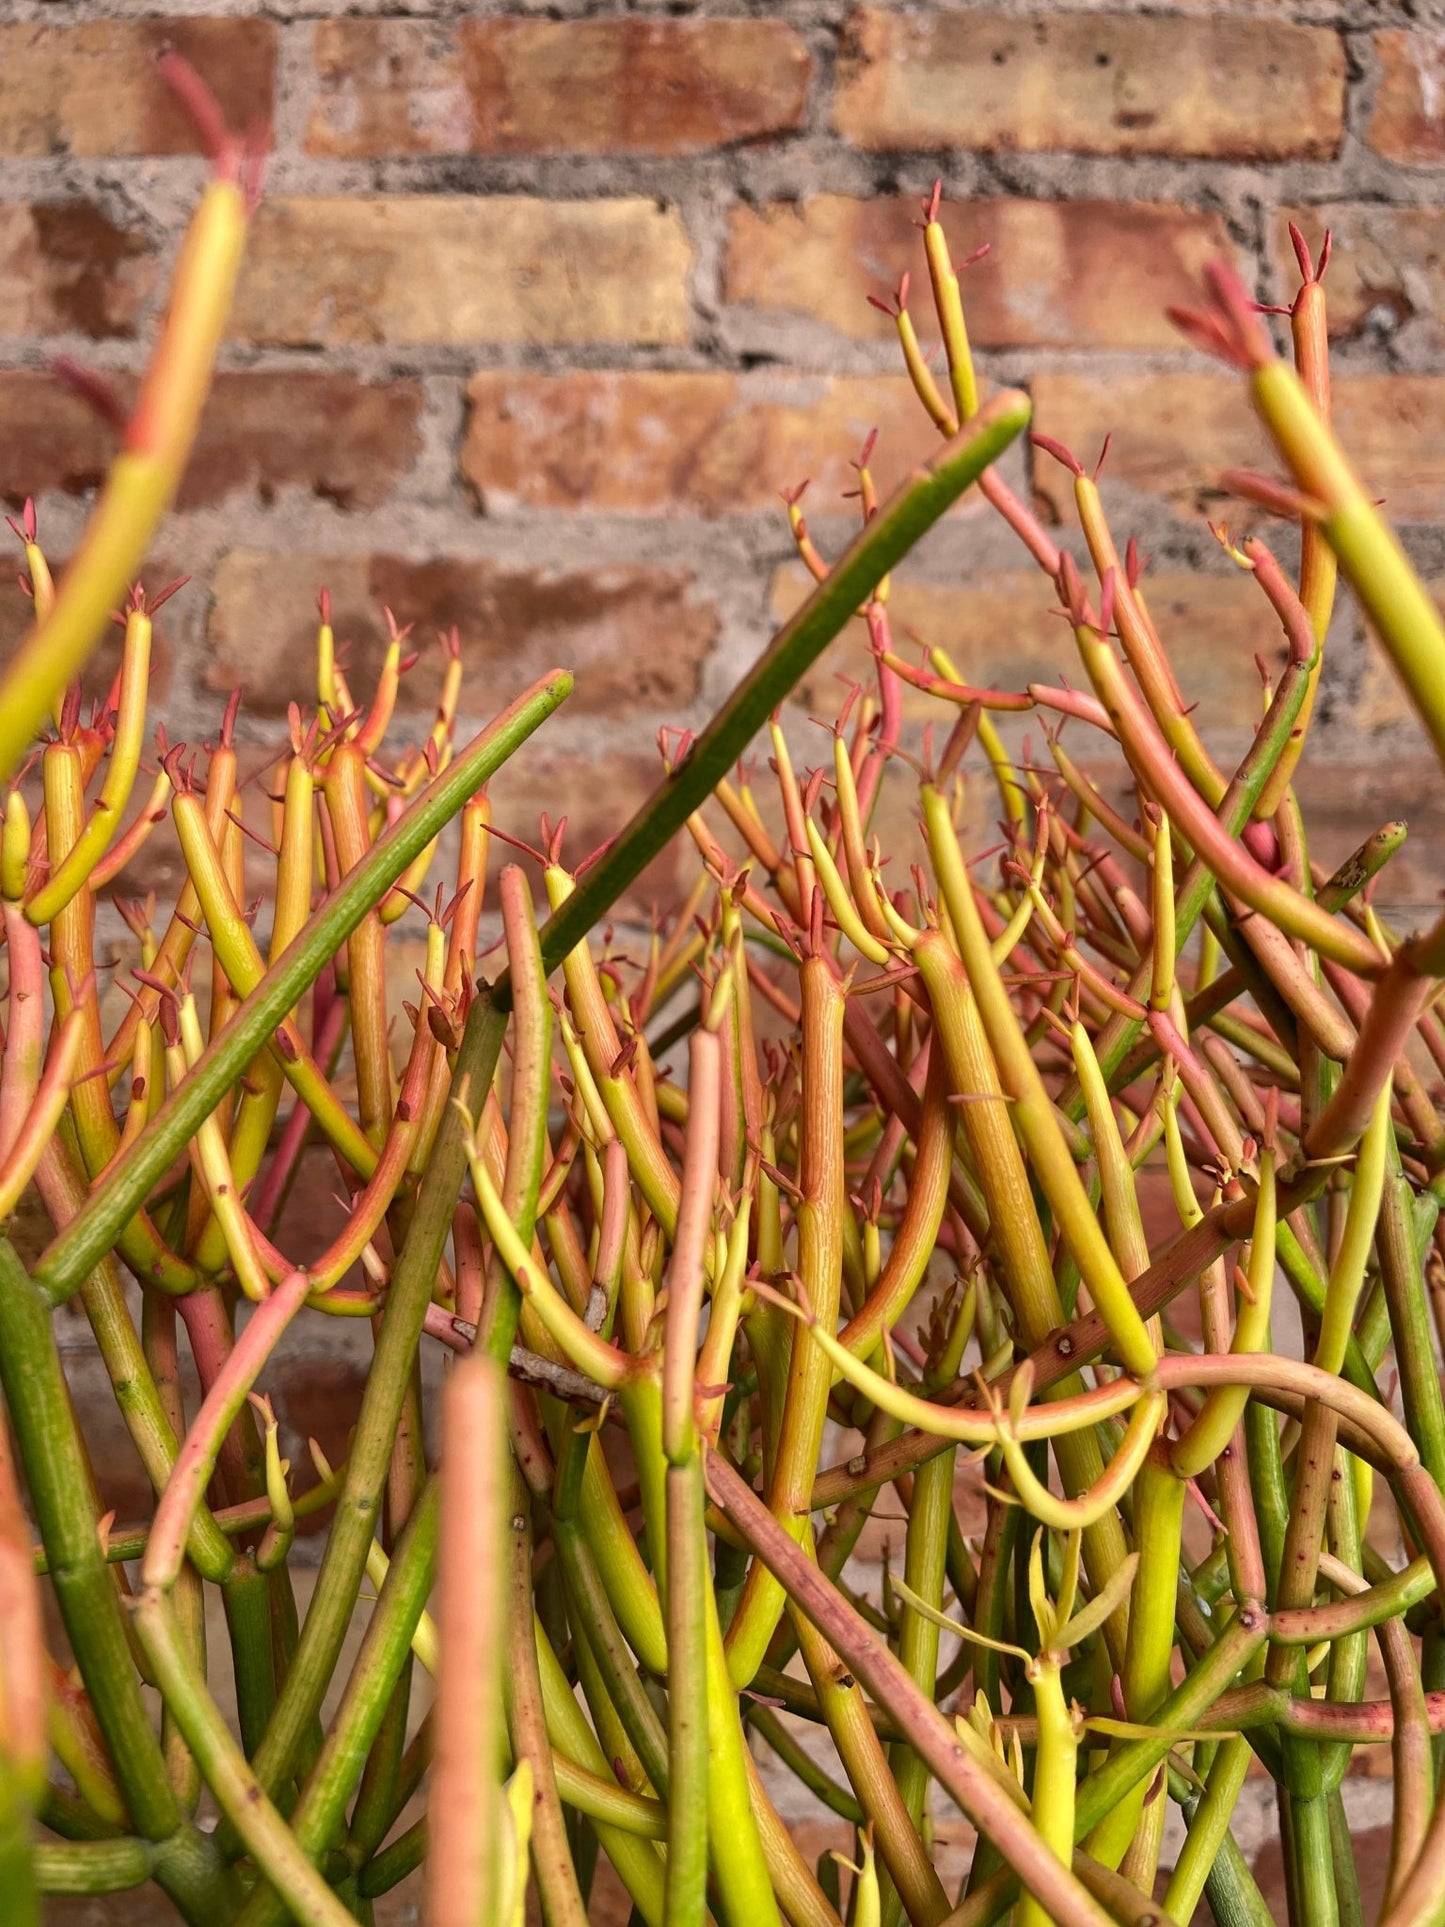 Euphorbia Tirucalli "Firesticks" - 6" - The Succulent City